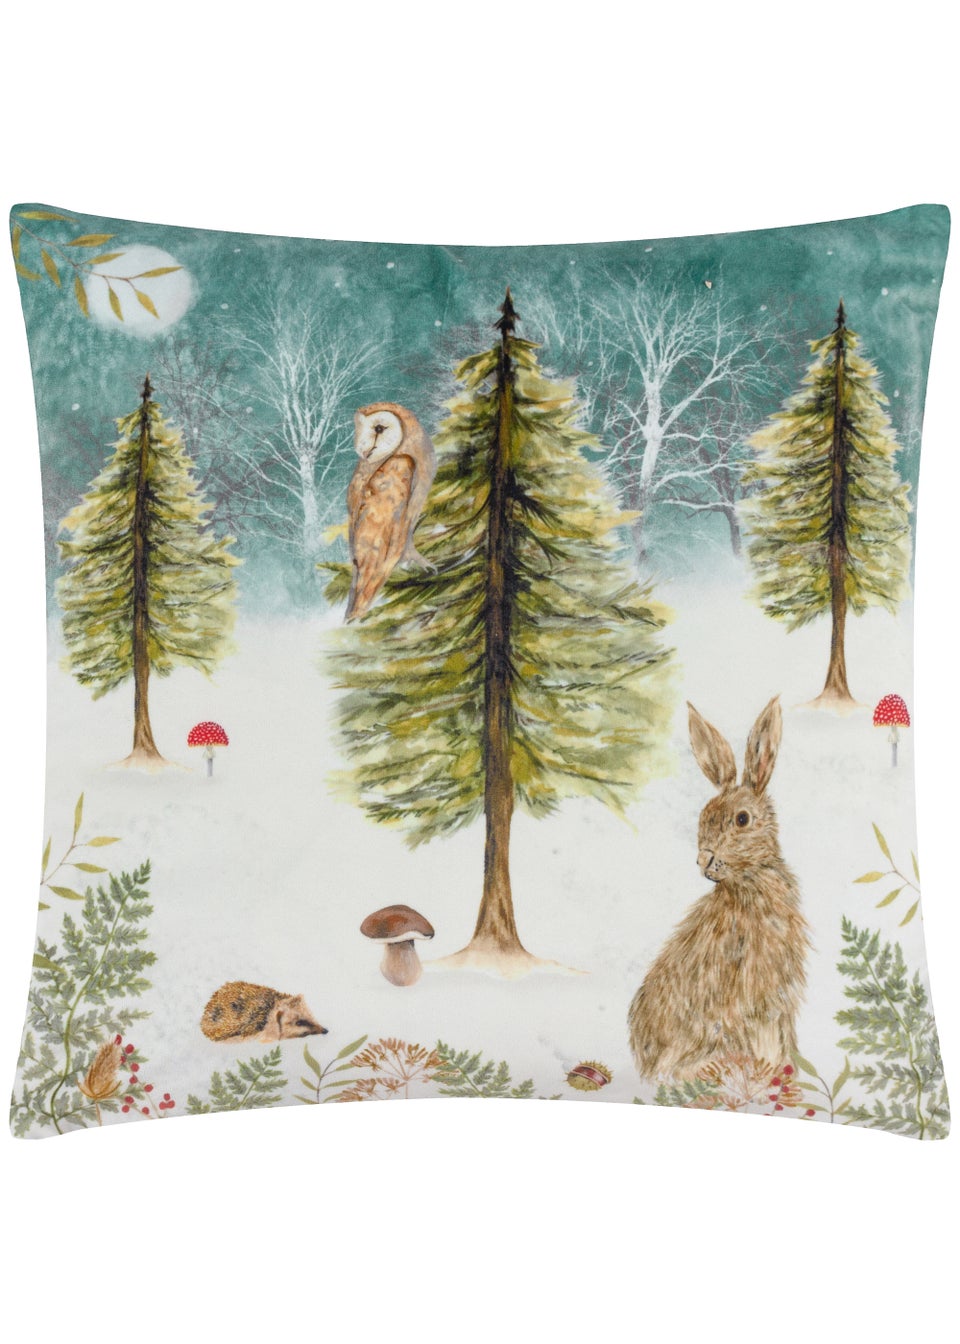 Evans Lichfield Christmas Owl Festive Filled Cushion (43cm x 43cm x 8cm)